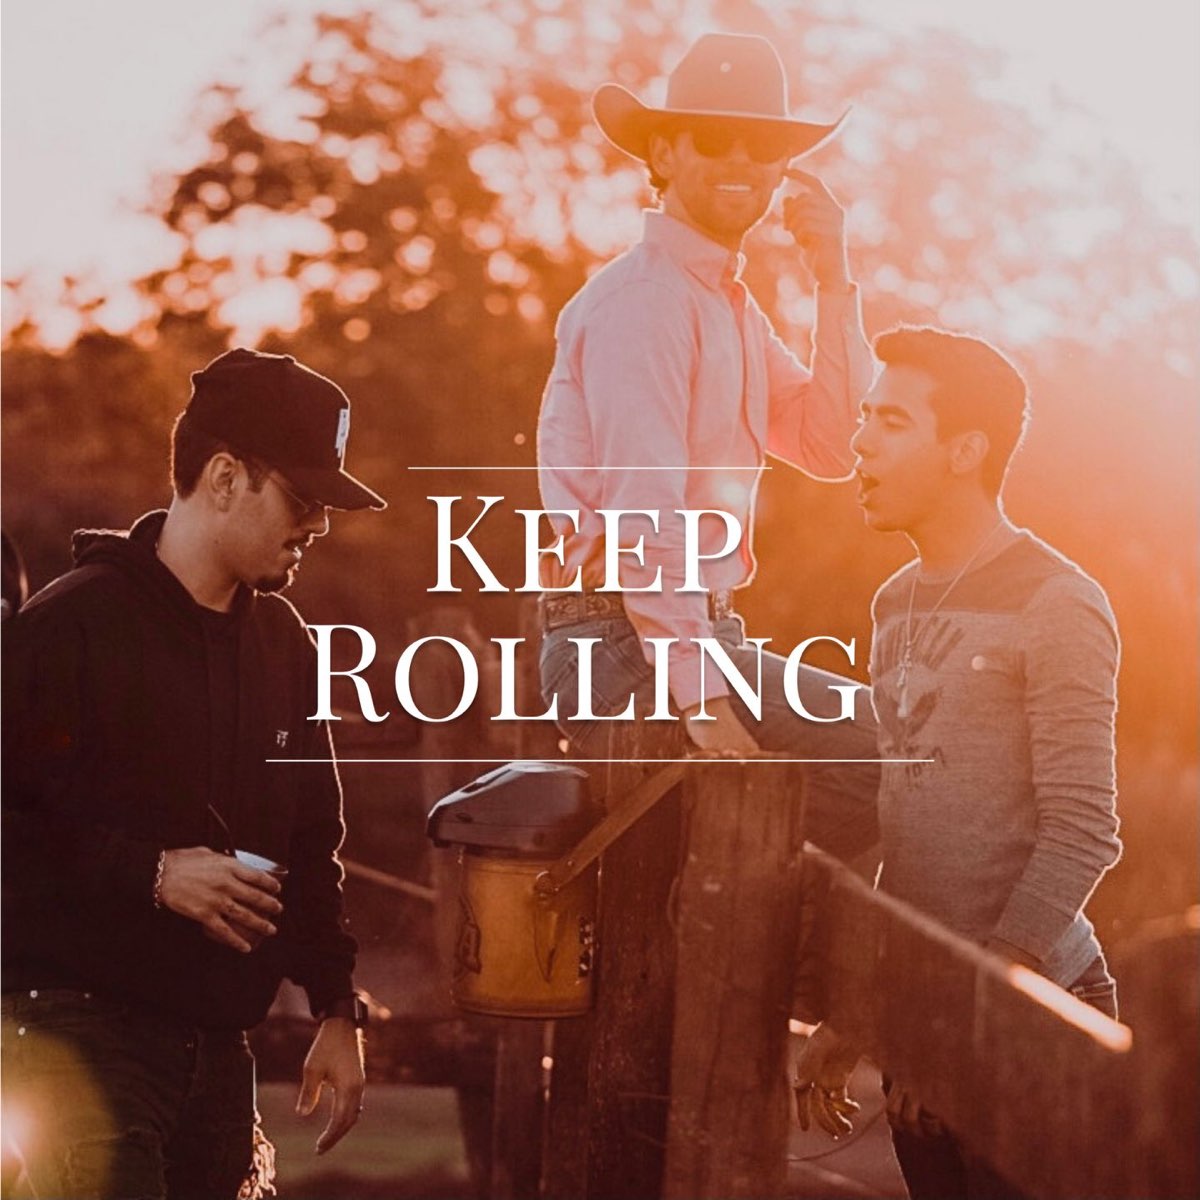 Keep Rolling - Single par 4i4, Antonio Moraes & Filipe Masetti sur Apple  Music